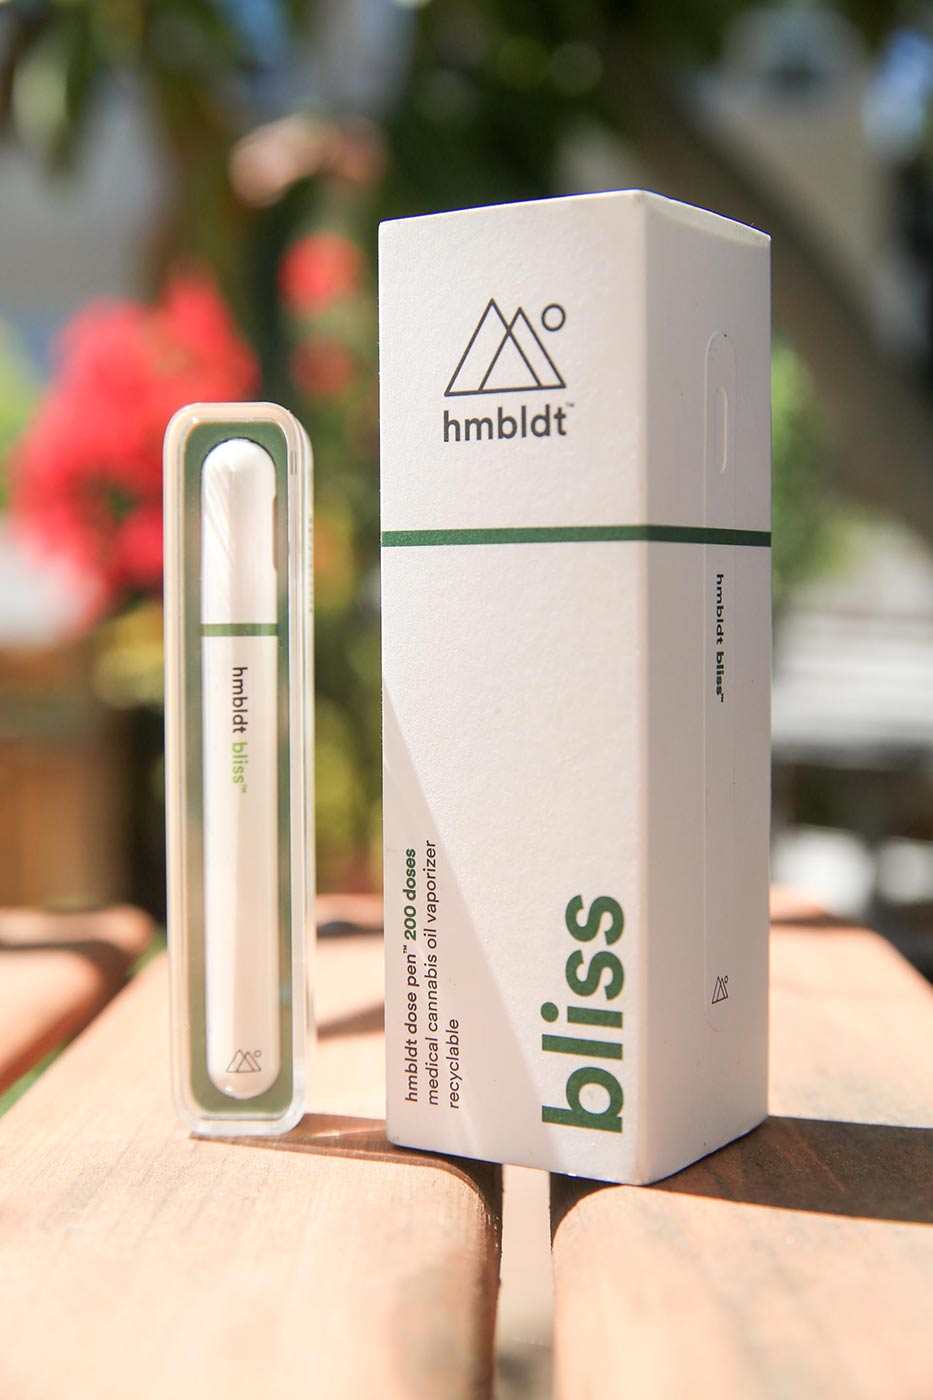 Hmbldt-Review Bliss cannabis pen